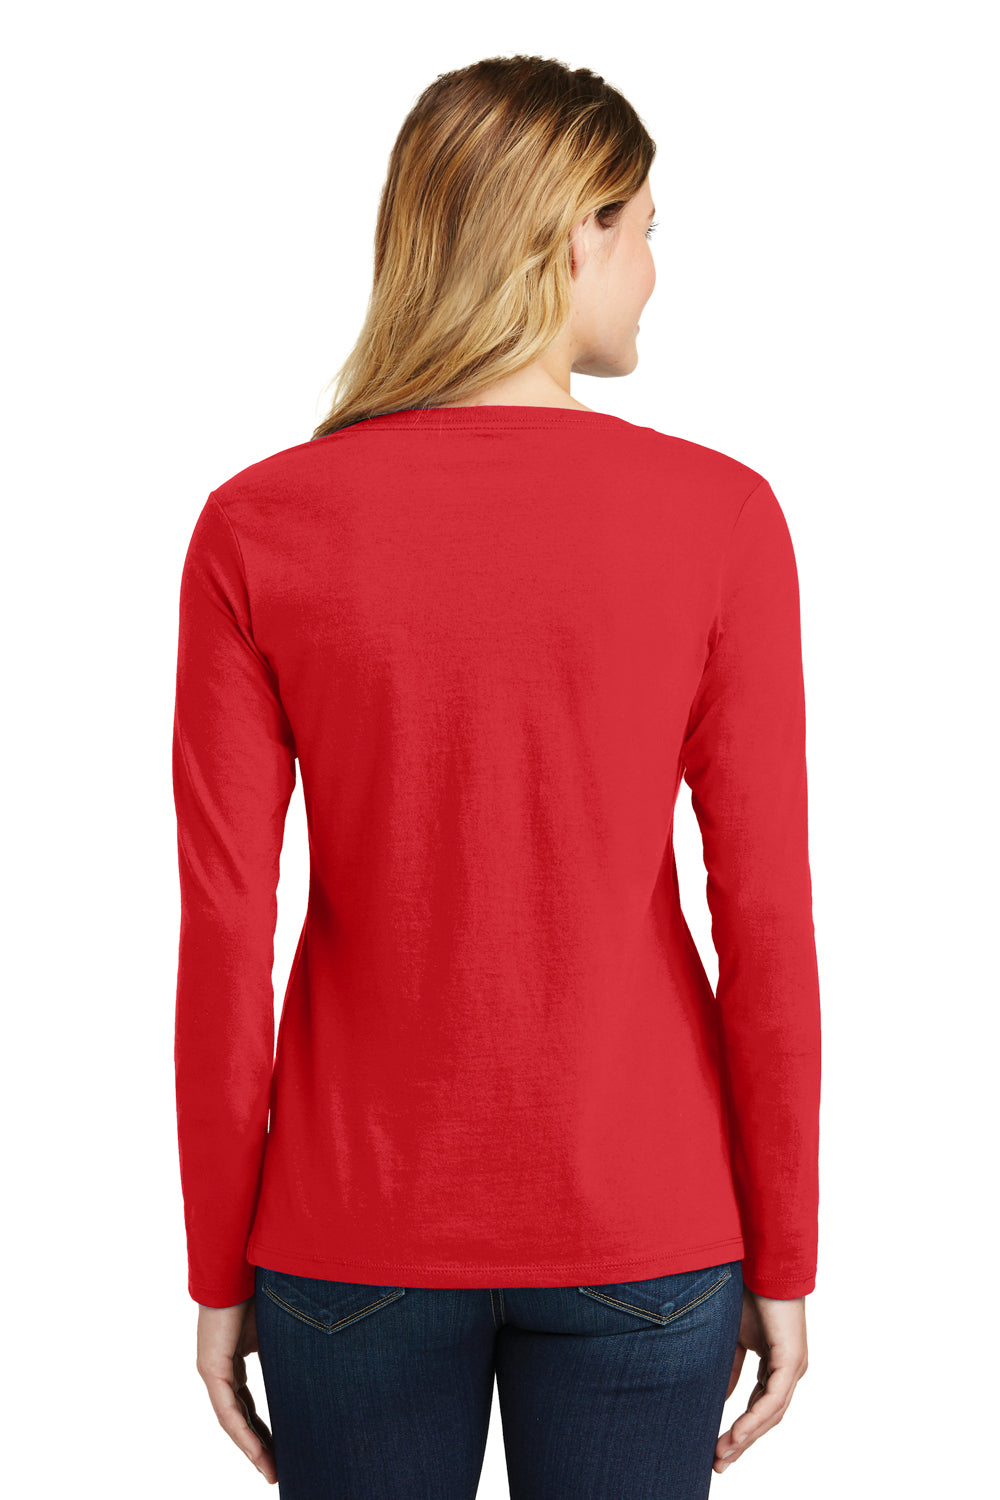 Port & Company LPC450VLS Womens Fan Favorite Long Sleeve V-Neck T-Shirt Red Back